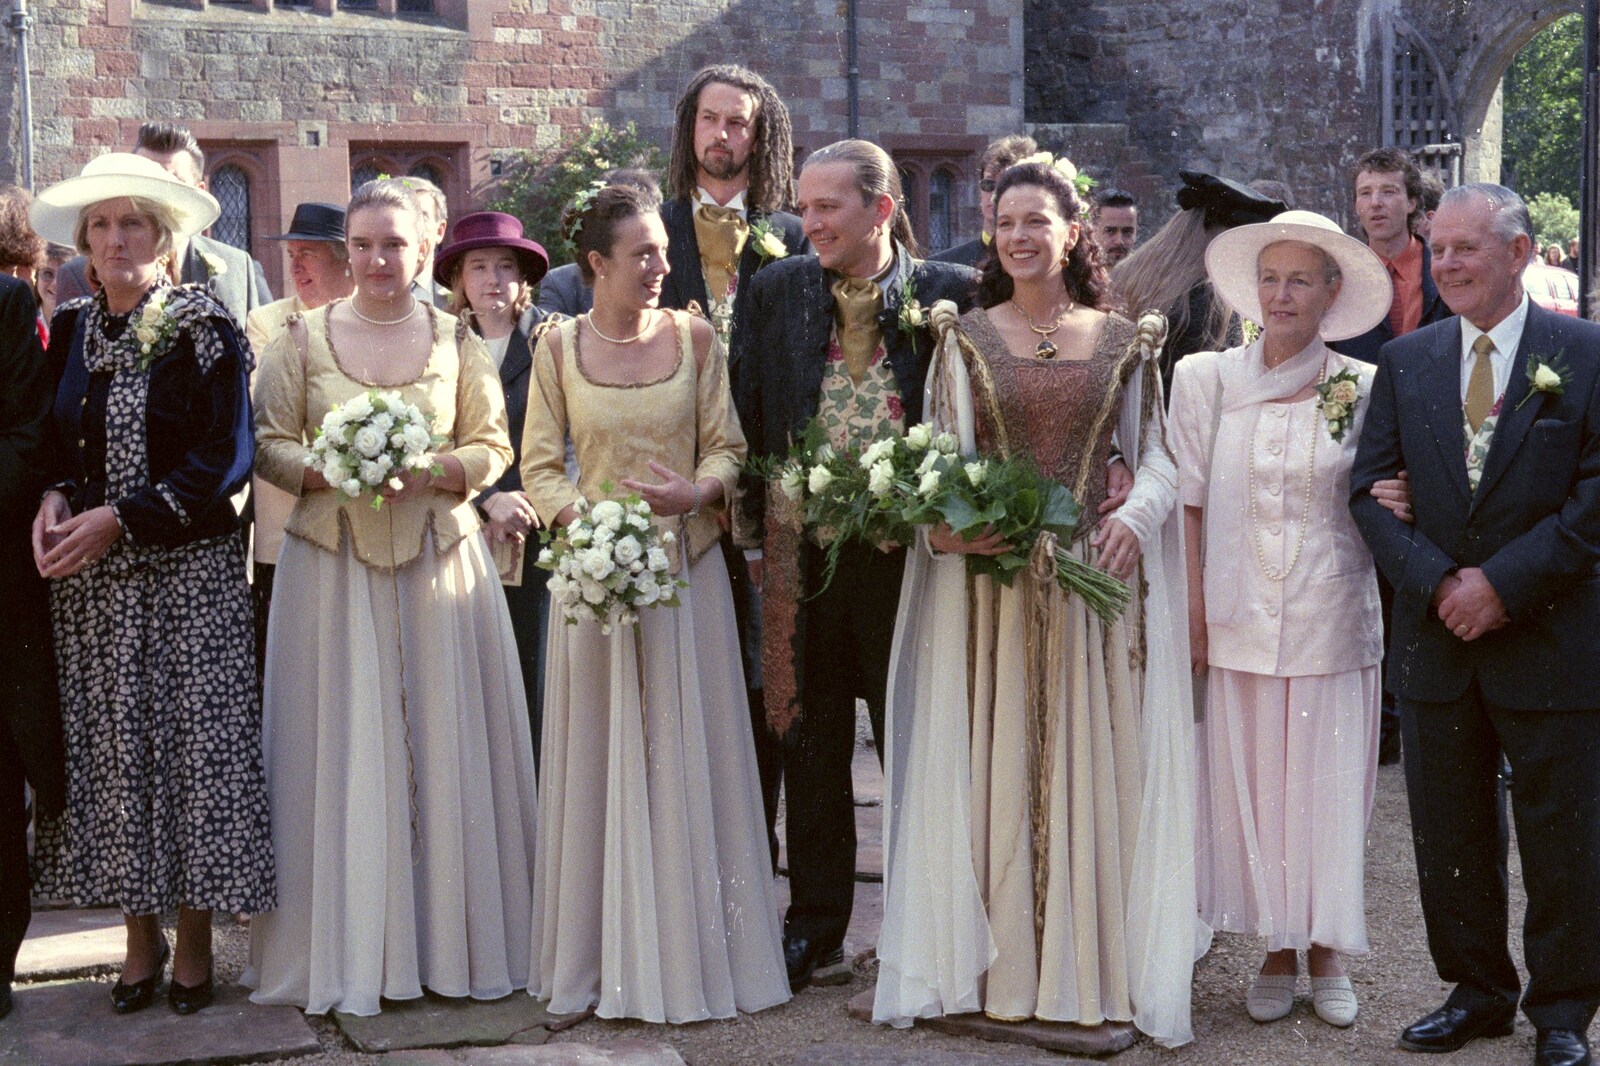 Stuart and Sarah's CISU Wedding, Naworth Castle, Brampton, Cumbria - 21st September 1996: A wedding group